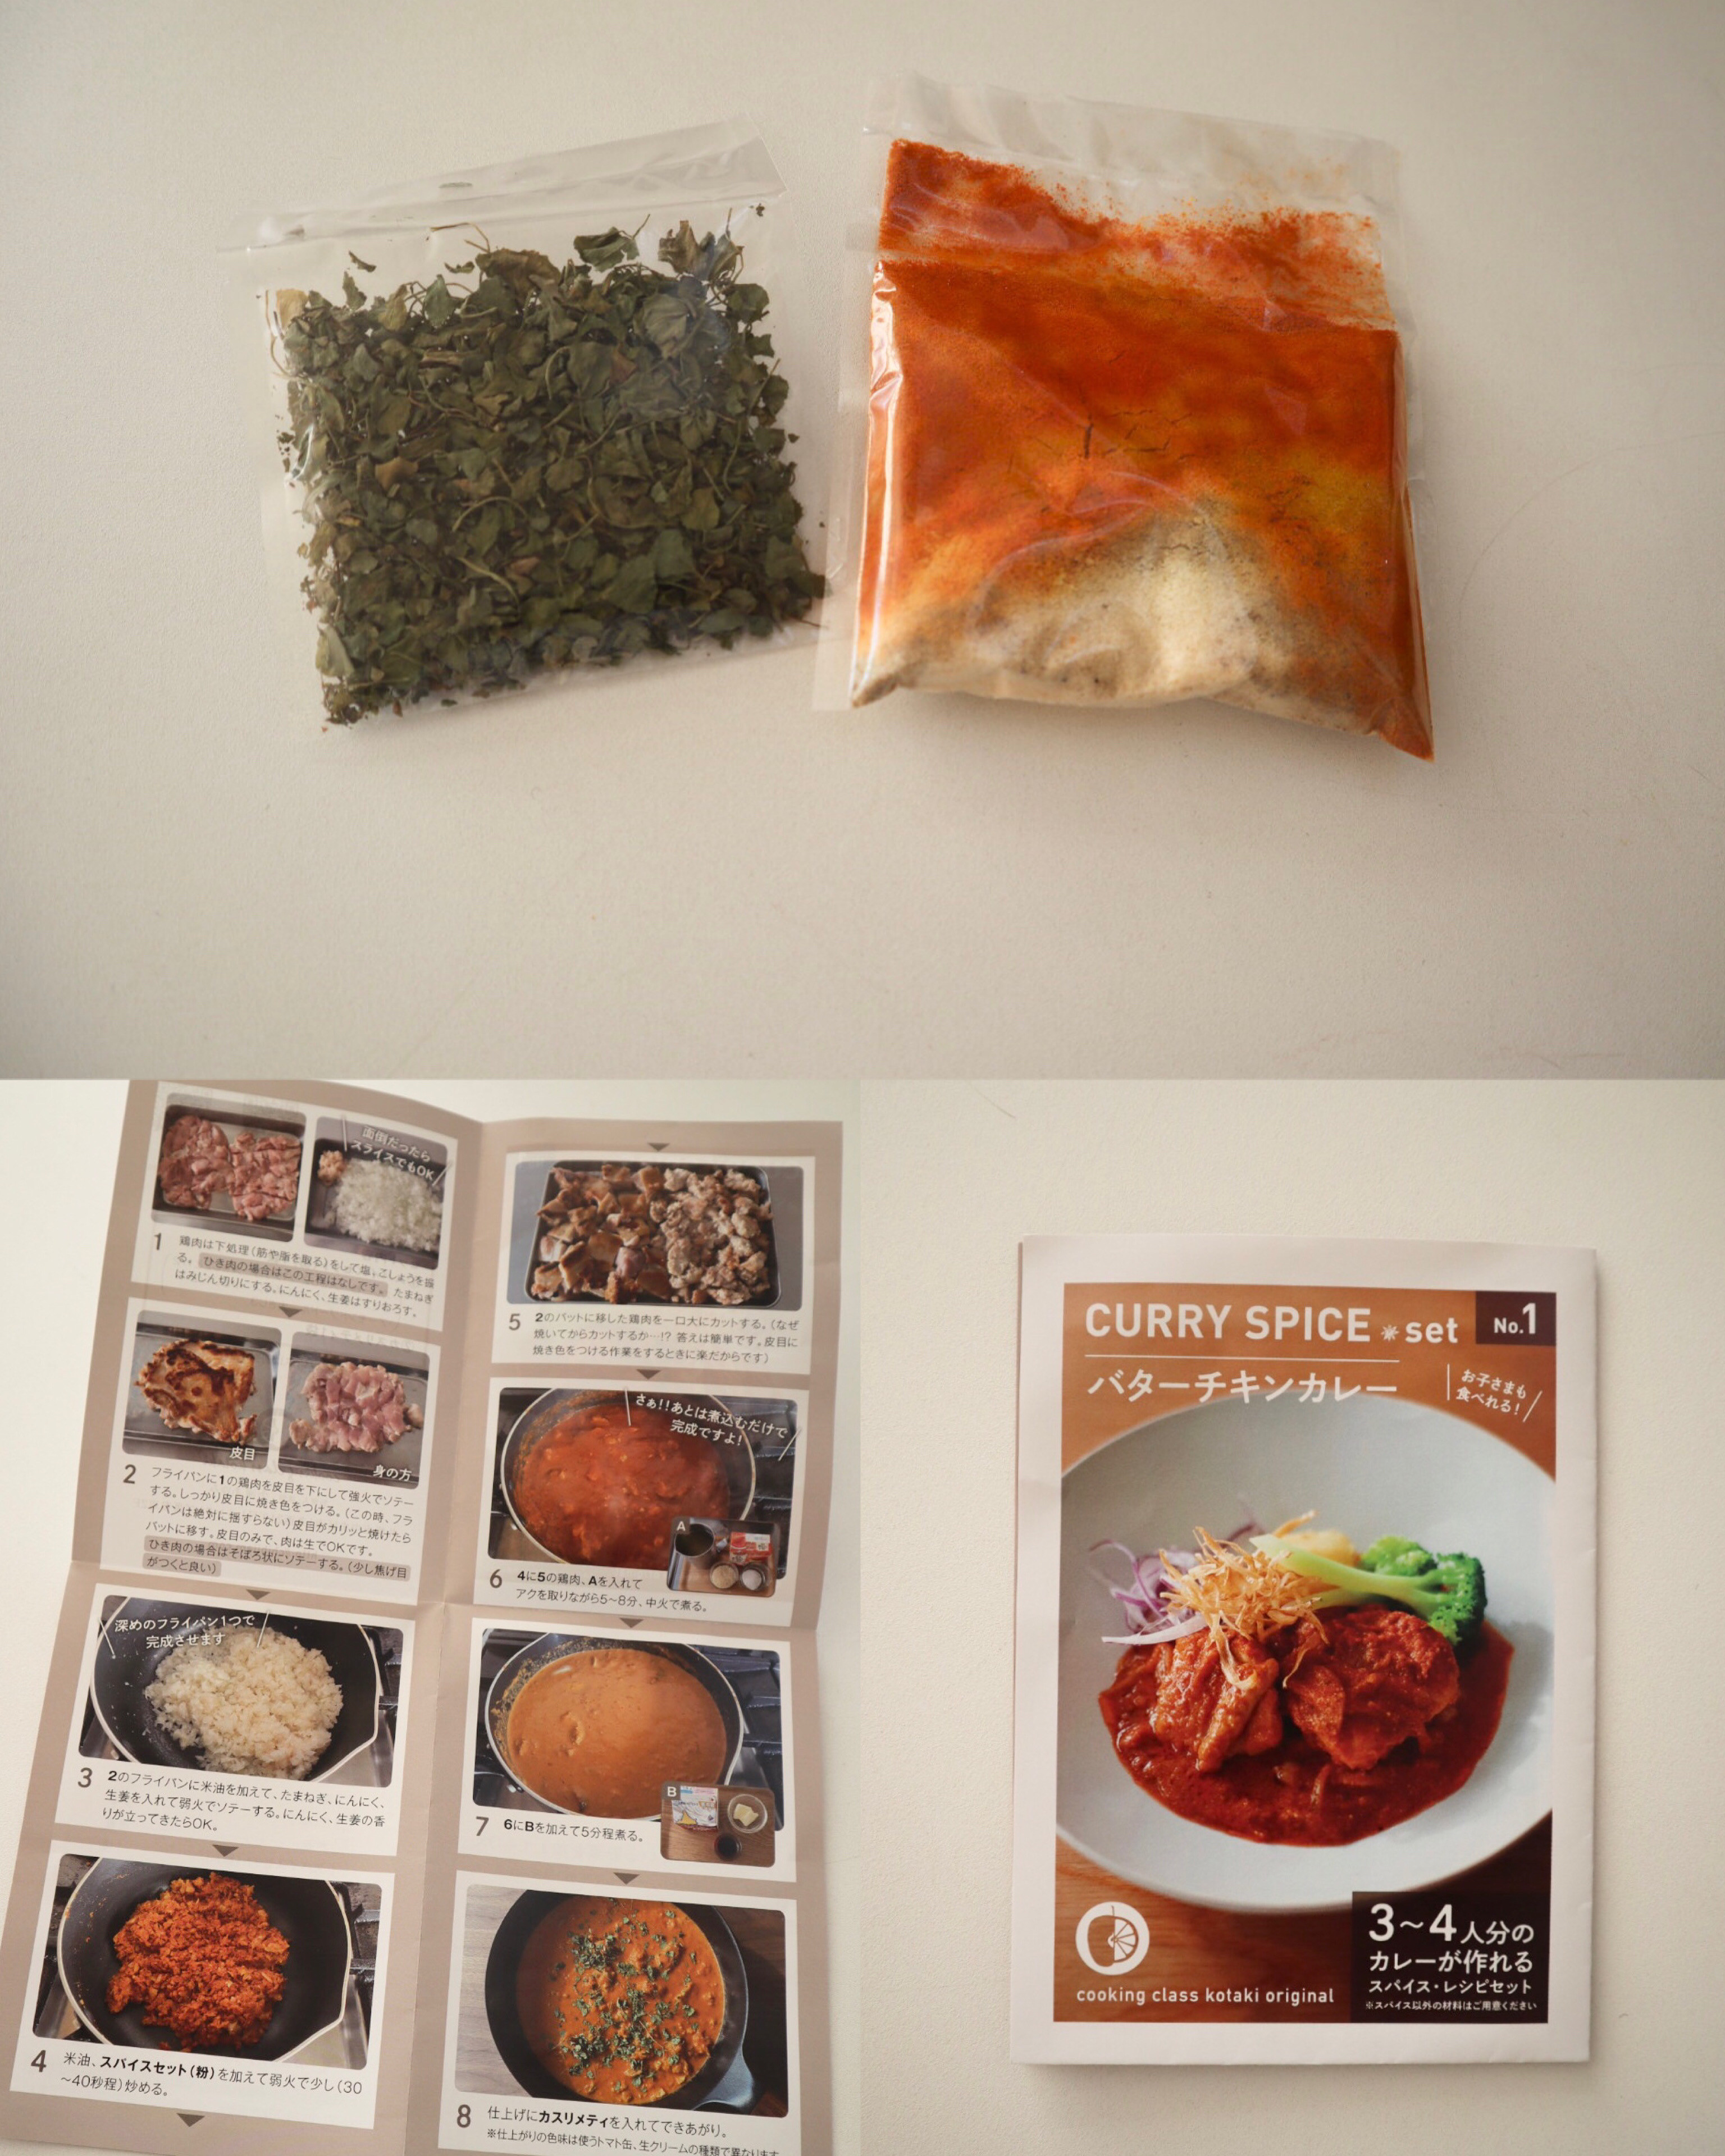 Cooking class kotakiのオリジナルカレースパイスの販売のお知らせ